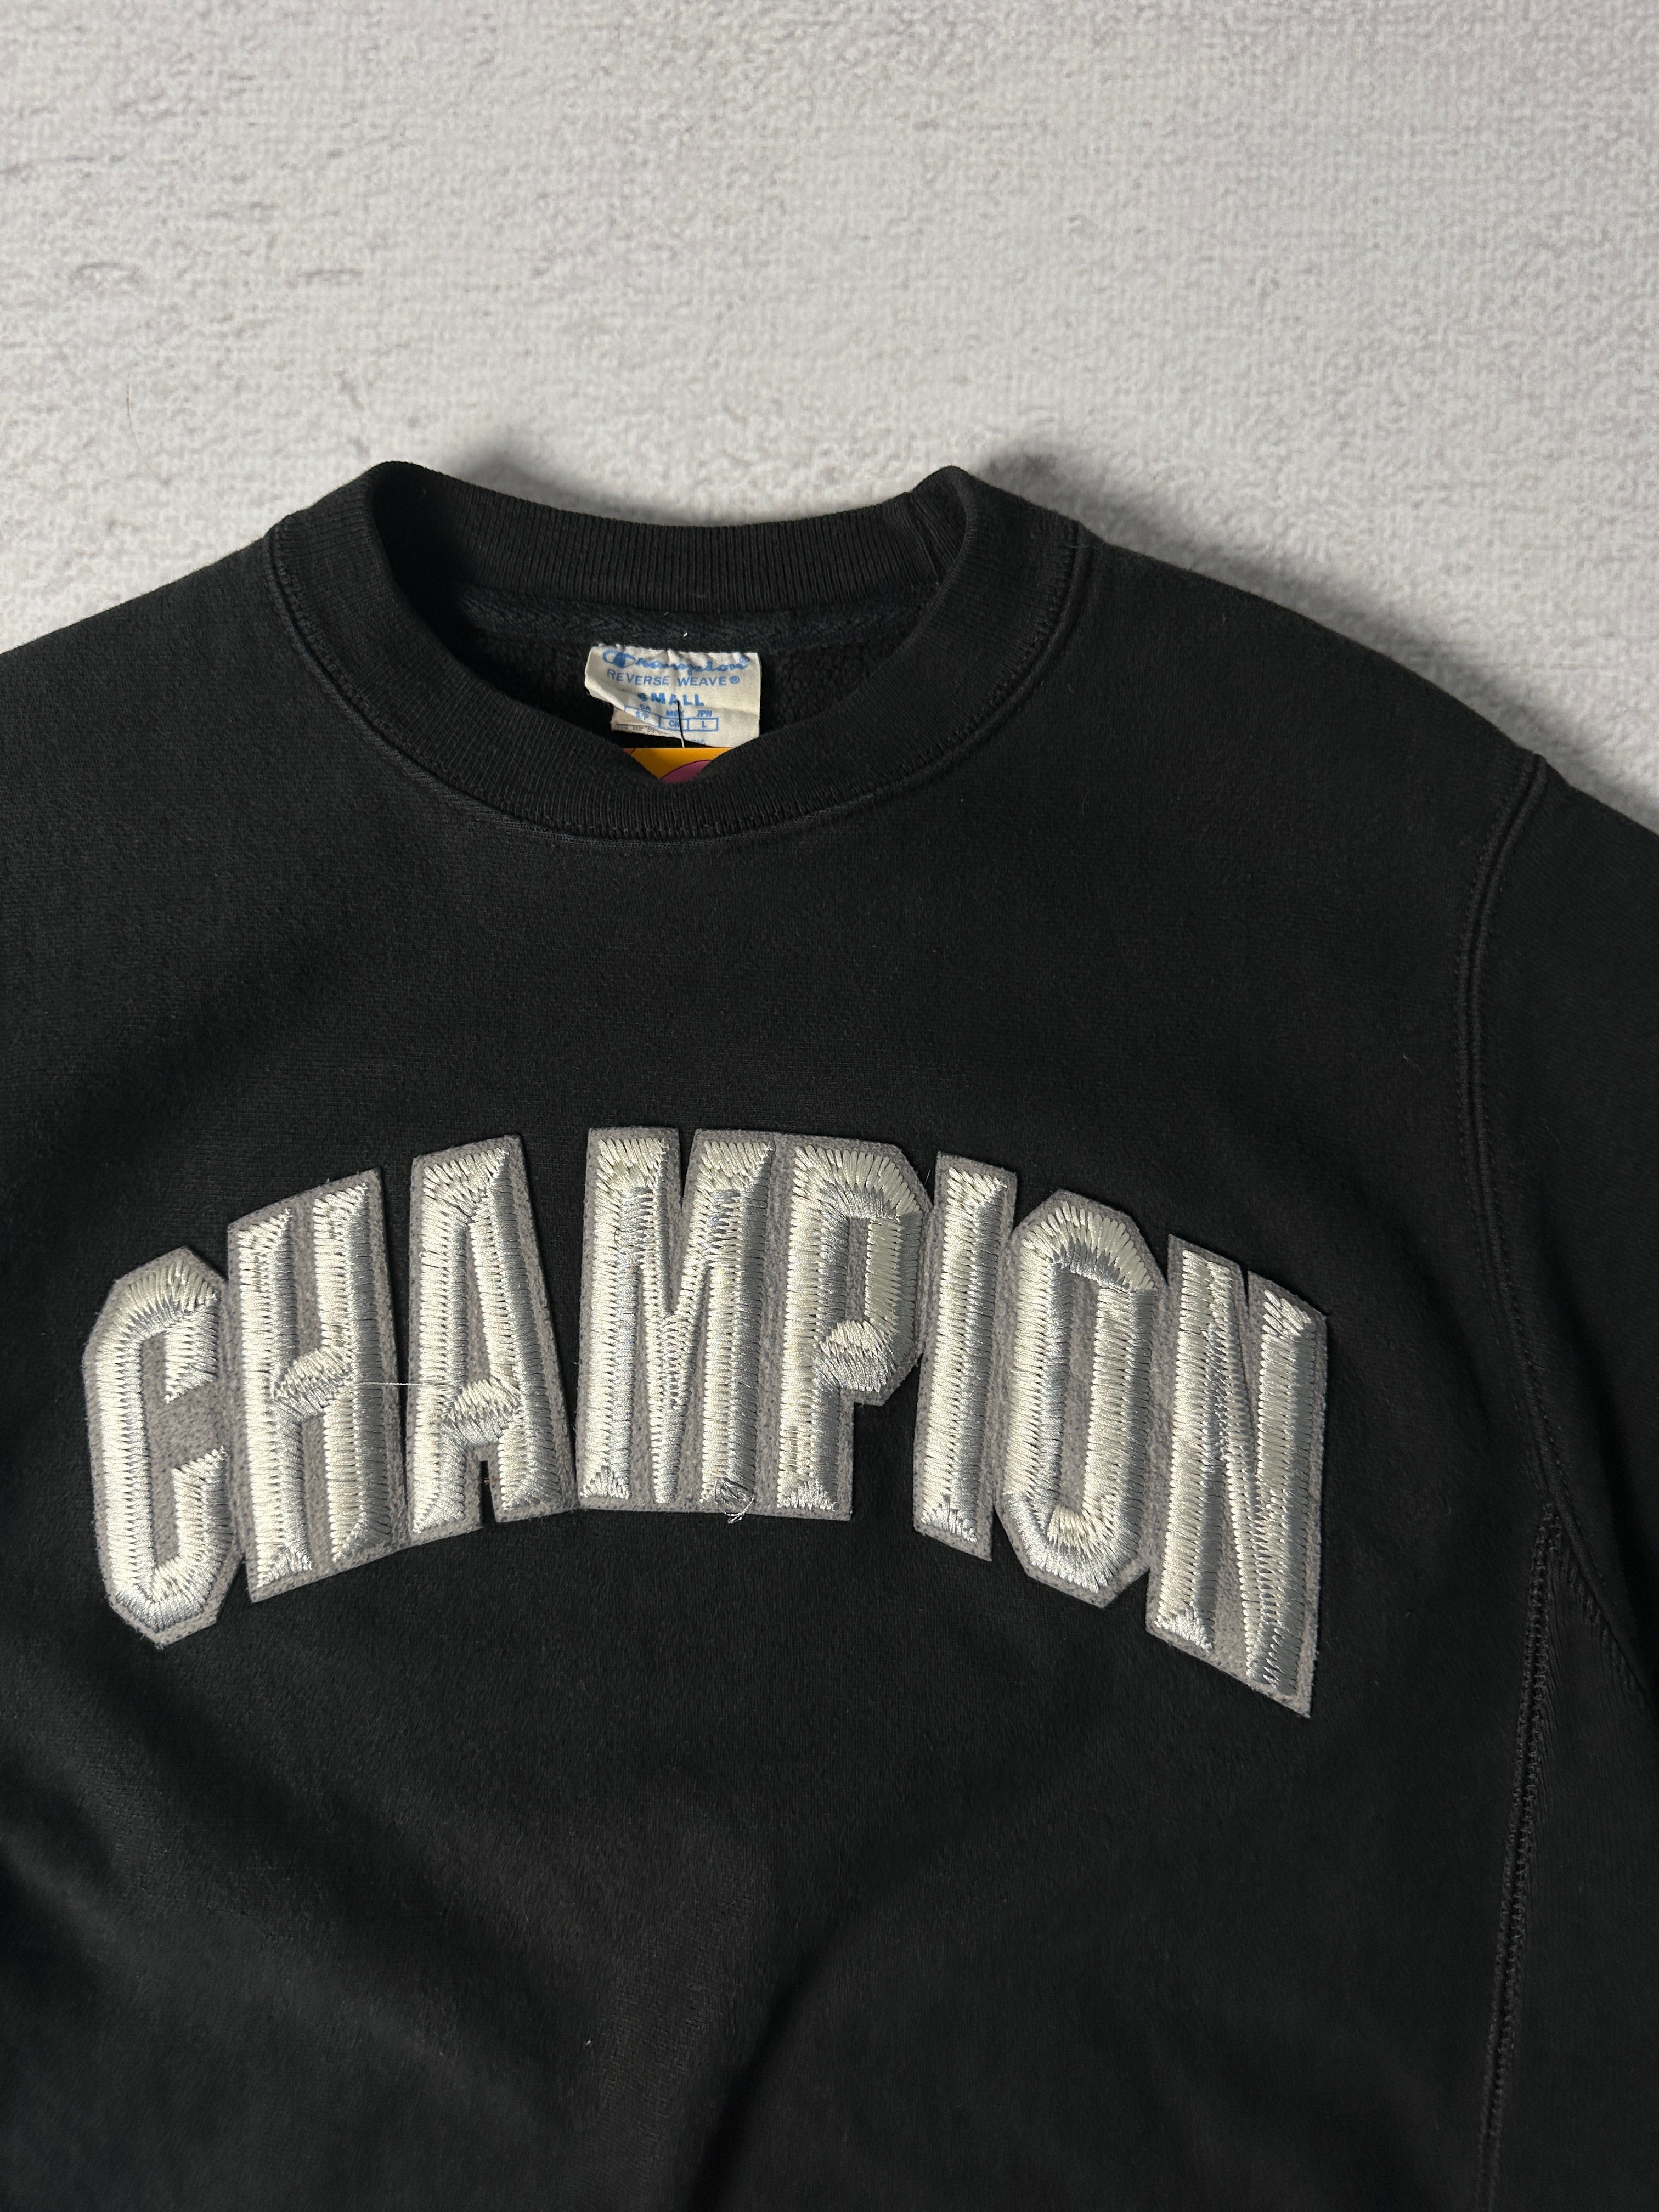 Champion Reverse Weave Crewneck Sweatshirt - Men's Small